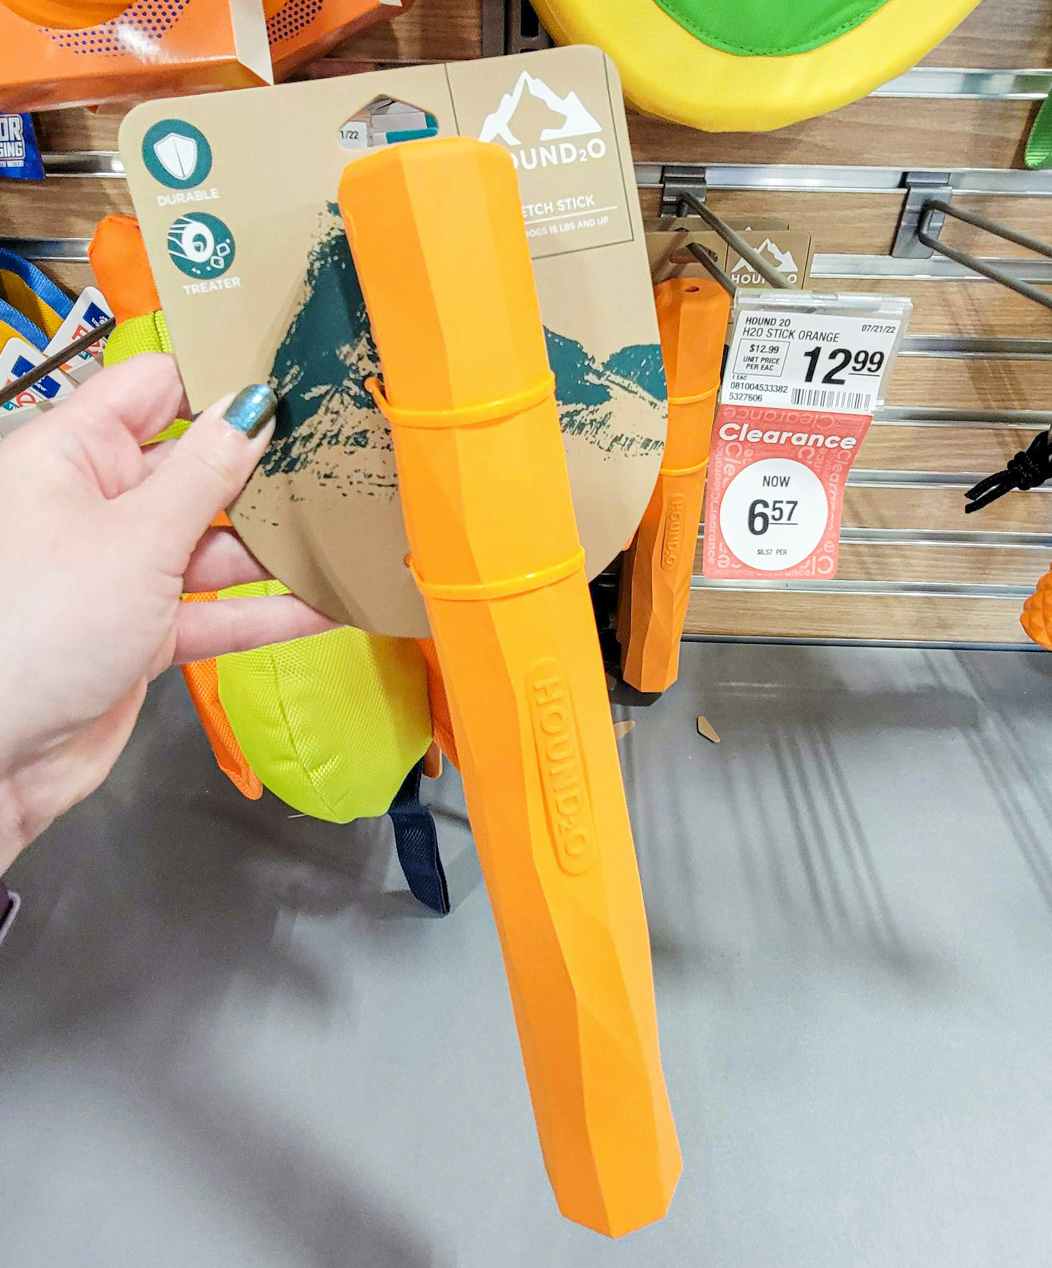 hand holding an orange fetch stick dog toy